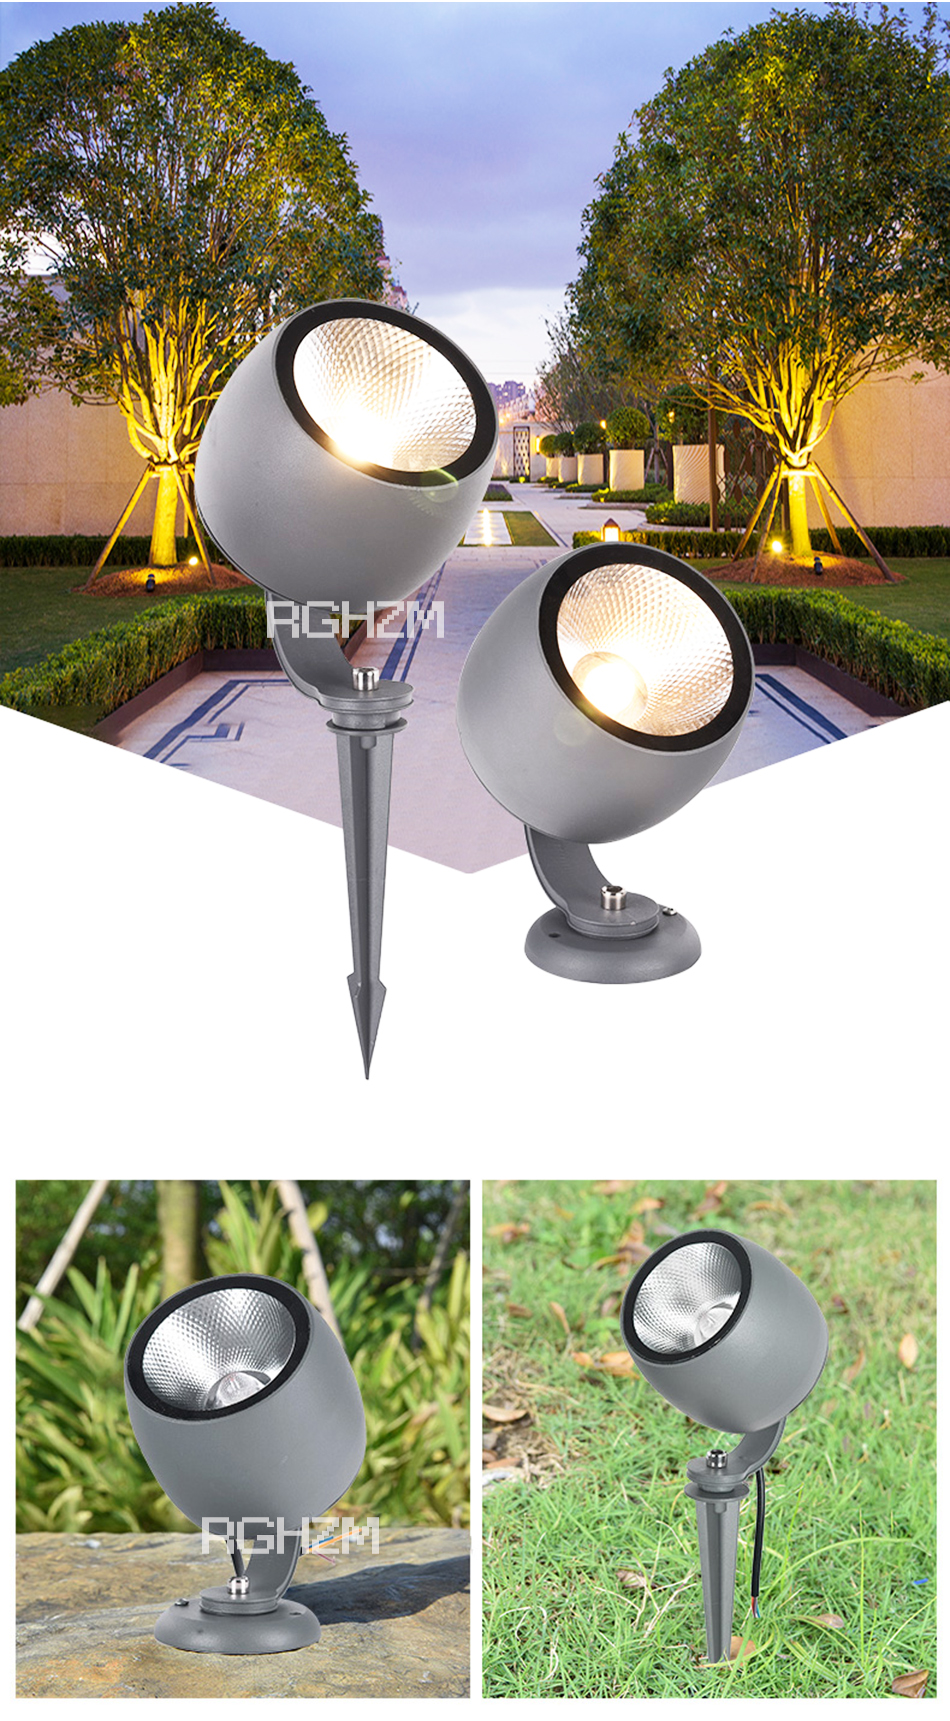 DC12V 24V 3W 7W LED Flood Light AC110V 220V Landscape Lamp IP67 Waterproof Outdoor Lighting Garden Spotlight